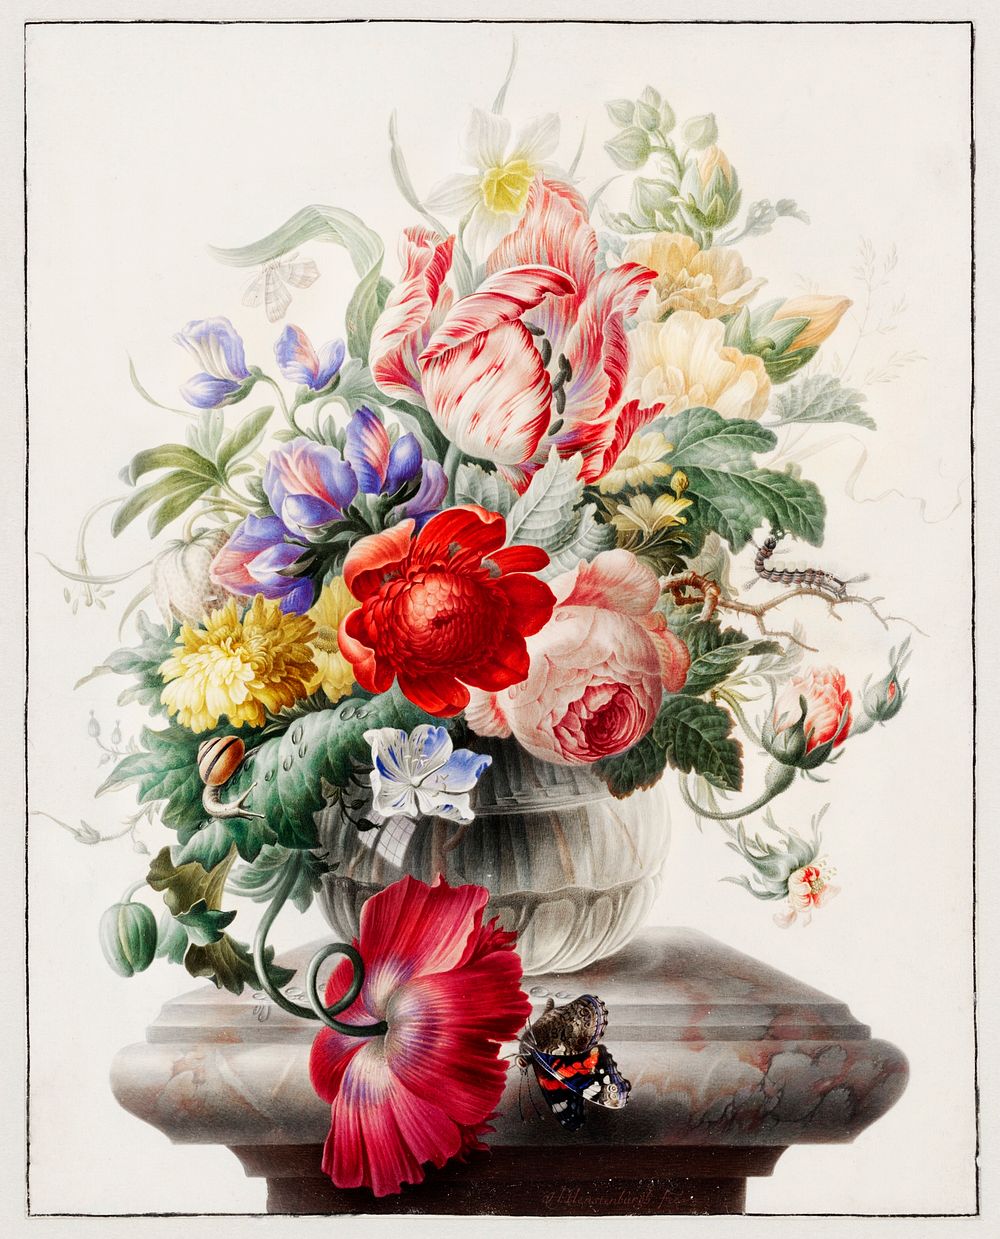 Flowers in a glass vase by Herman Henstenburgh (c. 1700). Original from The Rijksmuseum. Digitally enhanced by rawpixel.